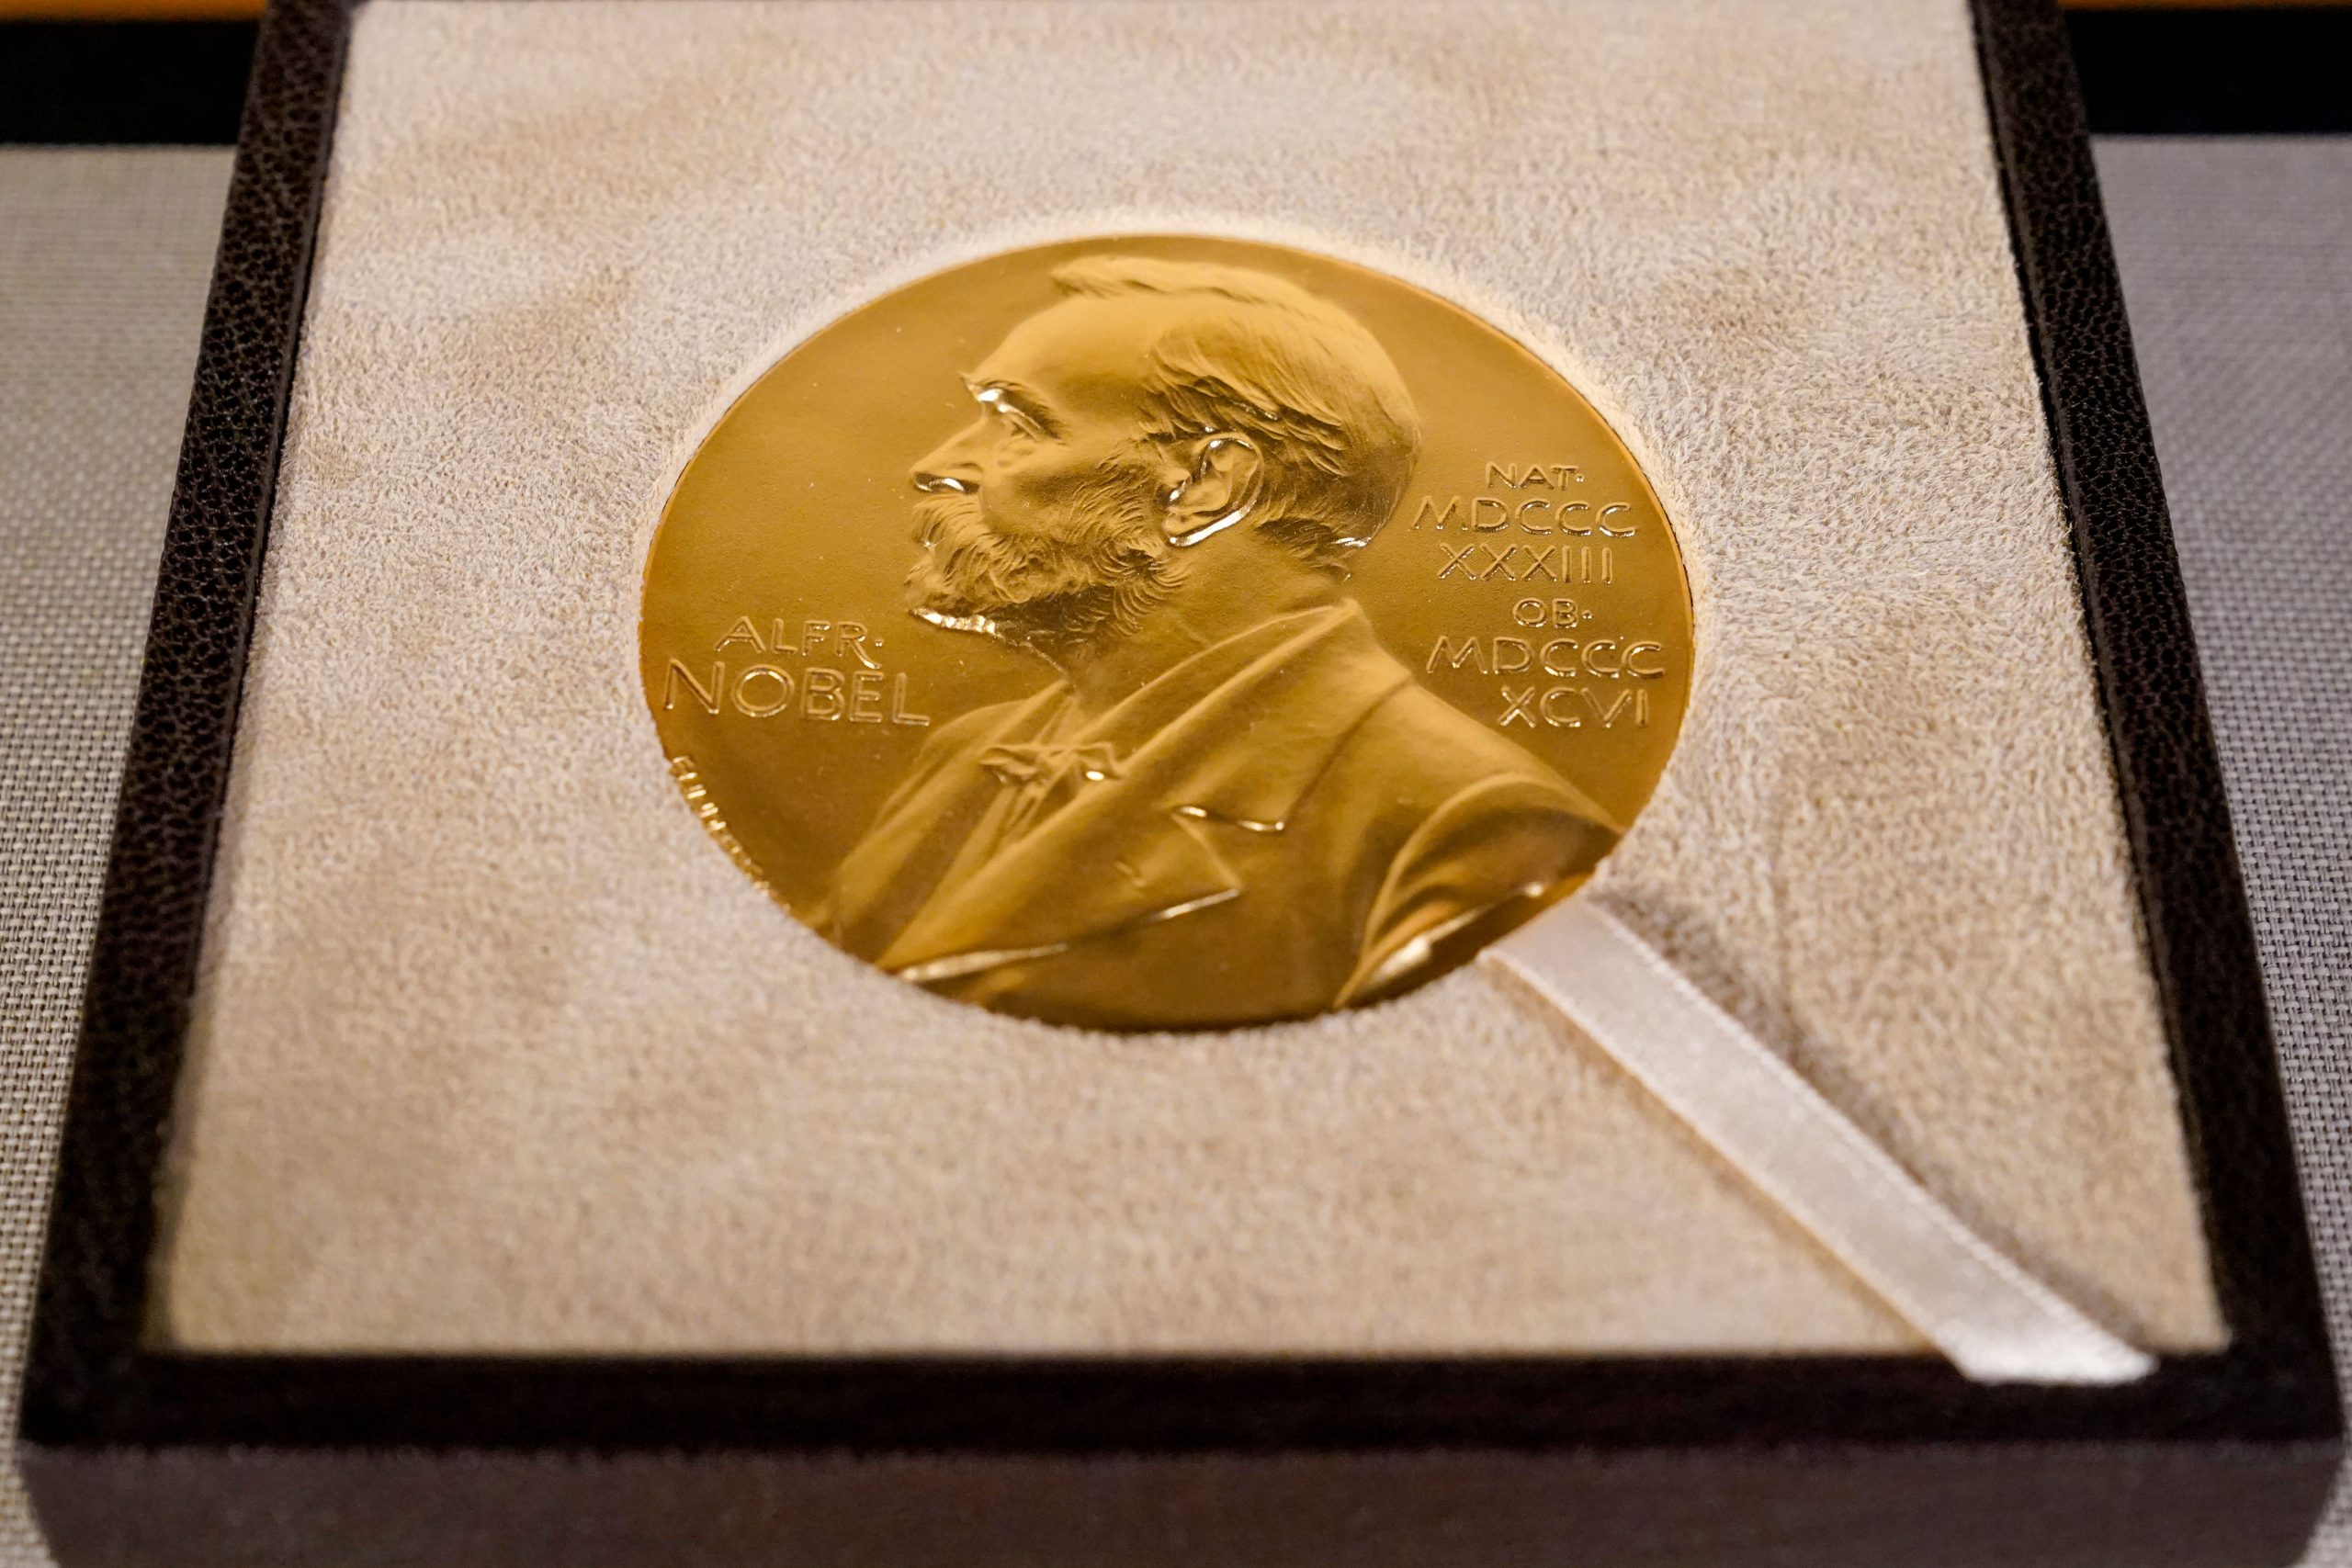 Nobel prize ceremonies forgo ‘the magic’ because of coronavirus